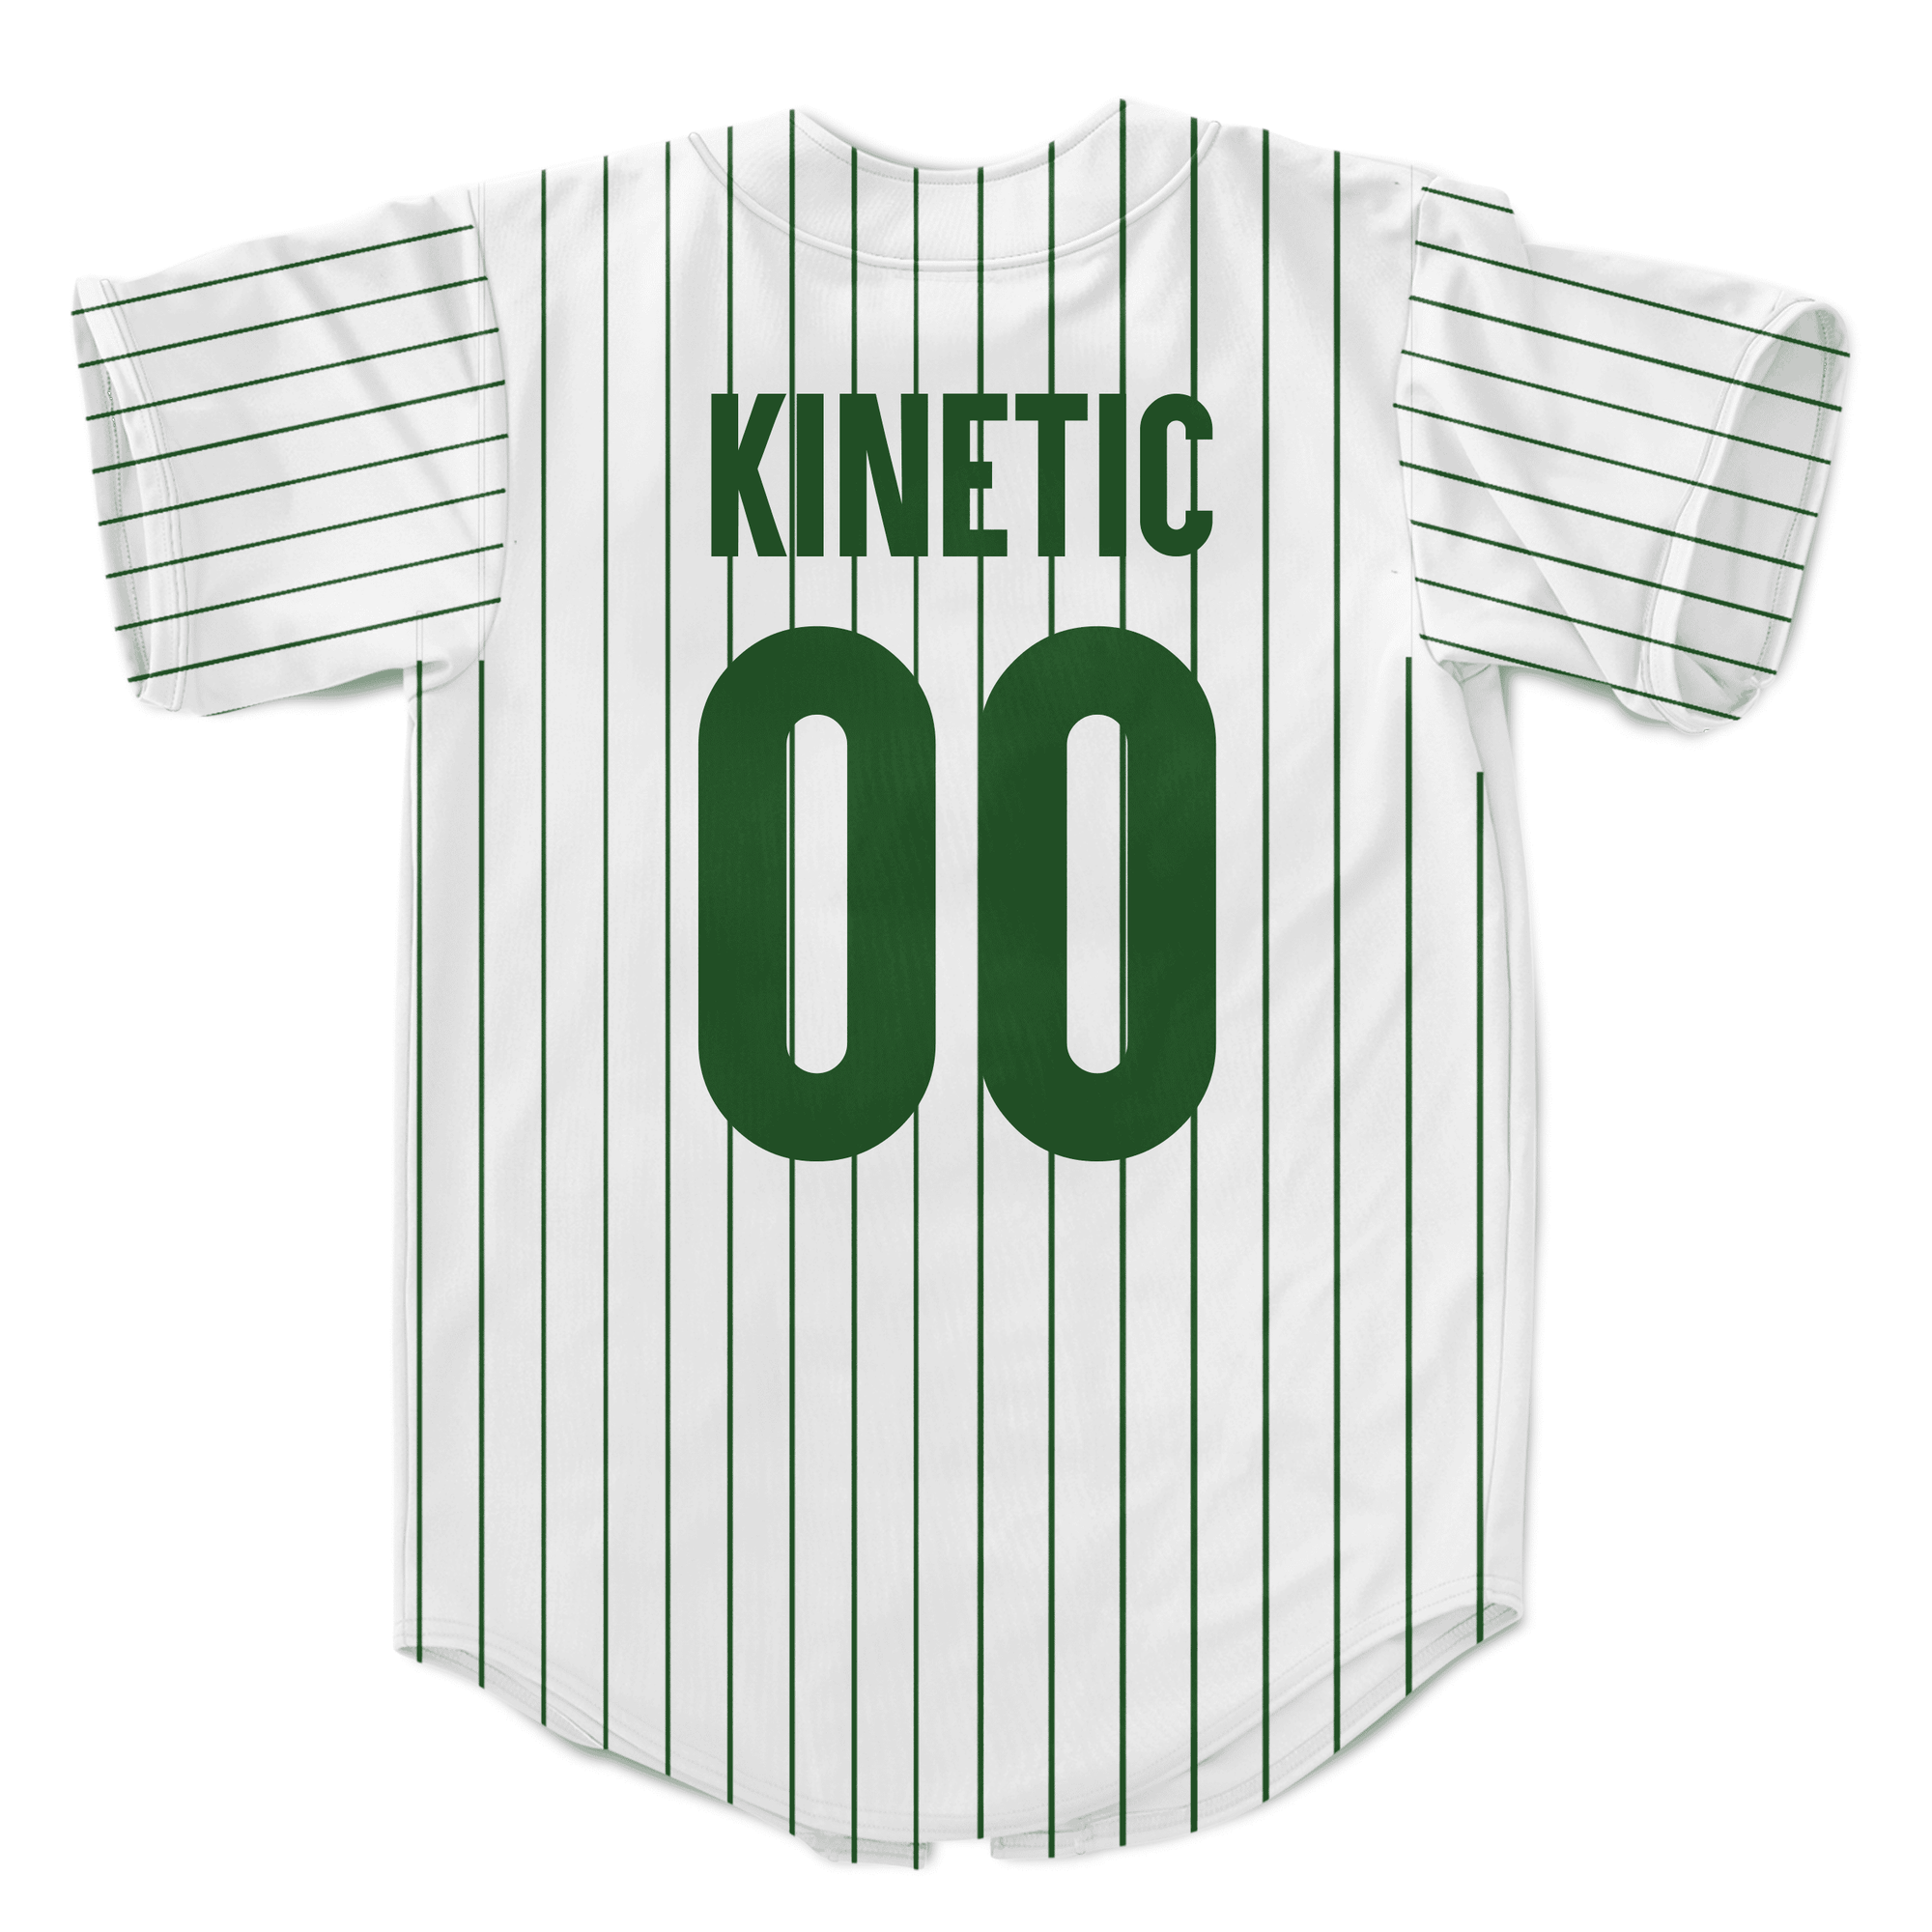 Phi Sigma Kappa - Green Pinstripe Baseball Jersey